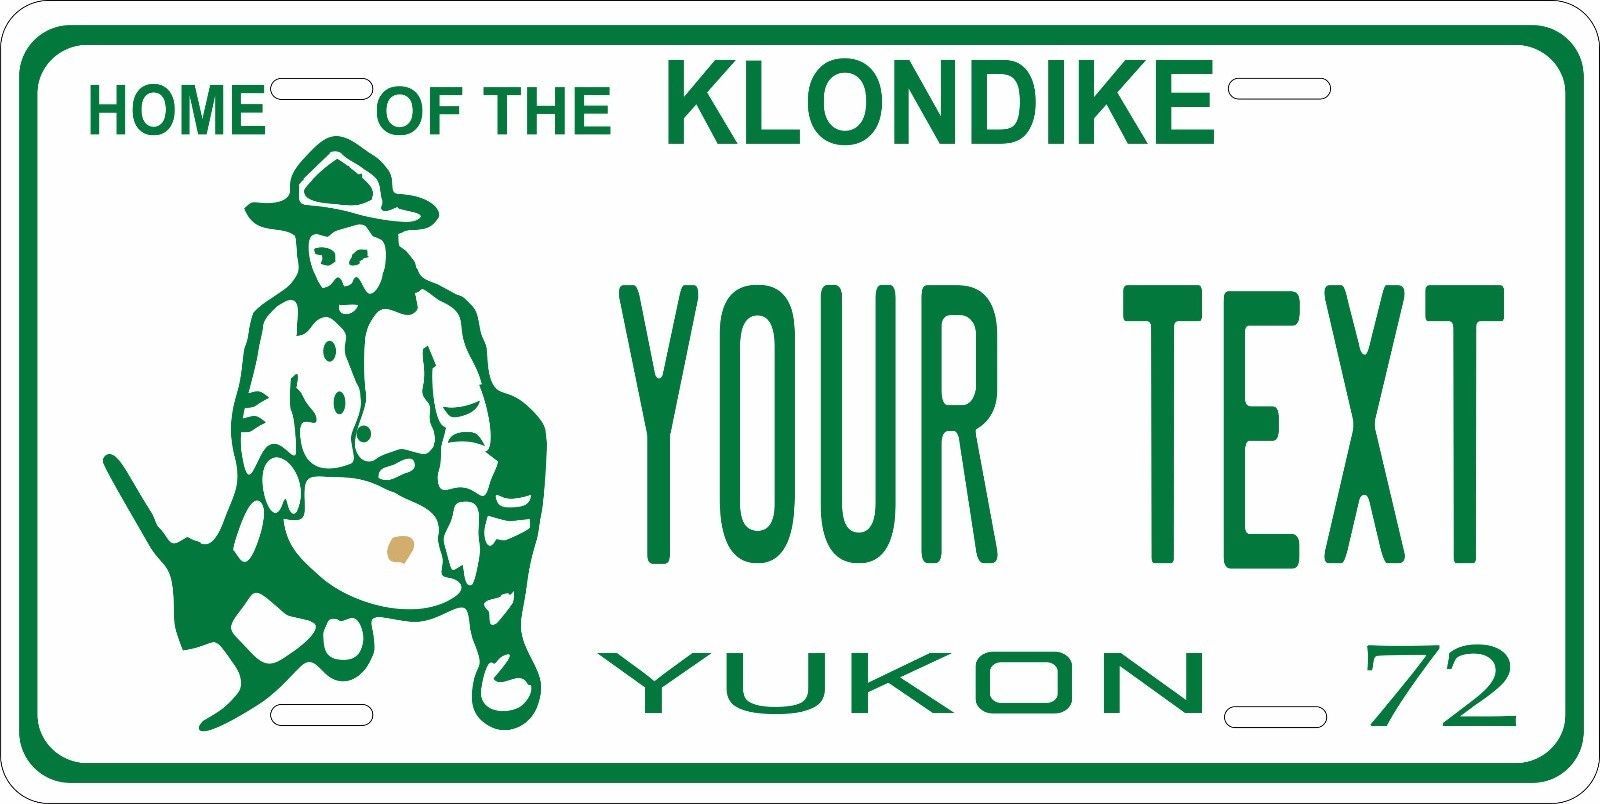 Yukon Canada 1972 License Plate Personalized Custom Car Bike Motorcycle Moped  - $10.99 - $18.22